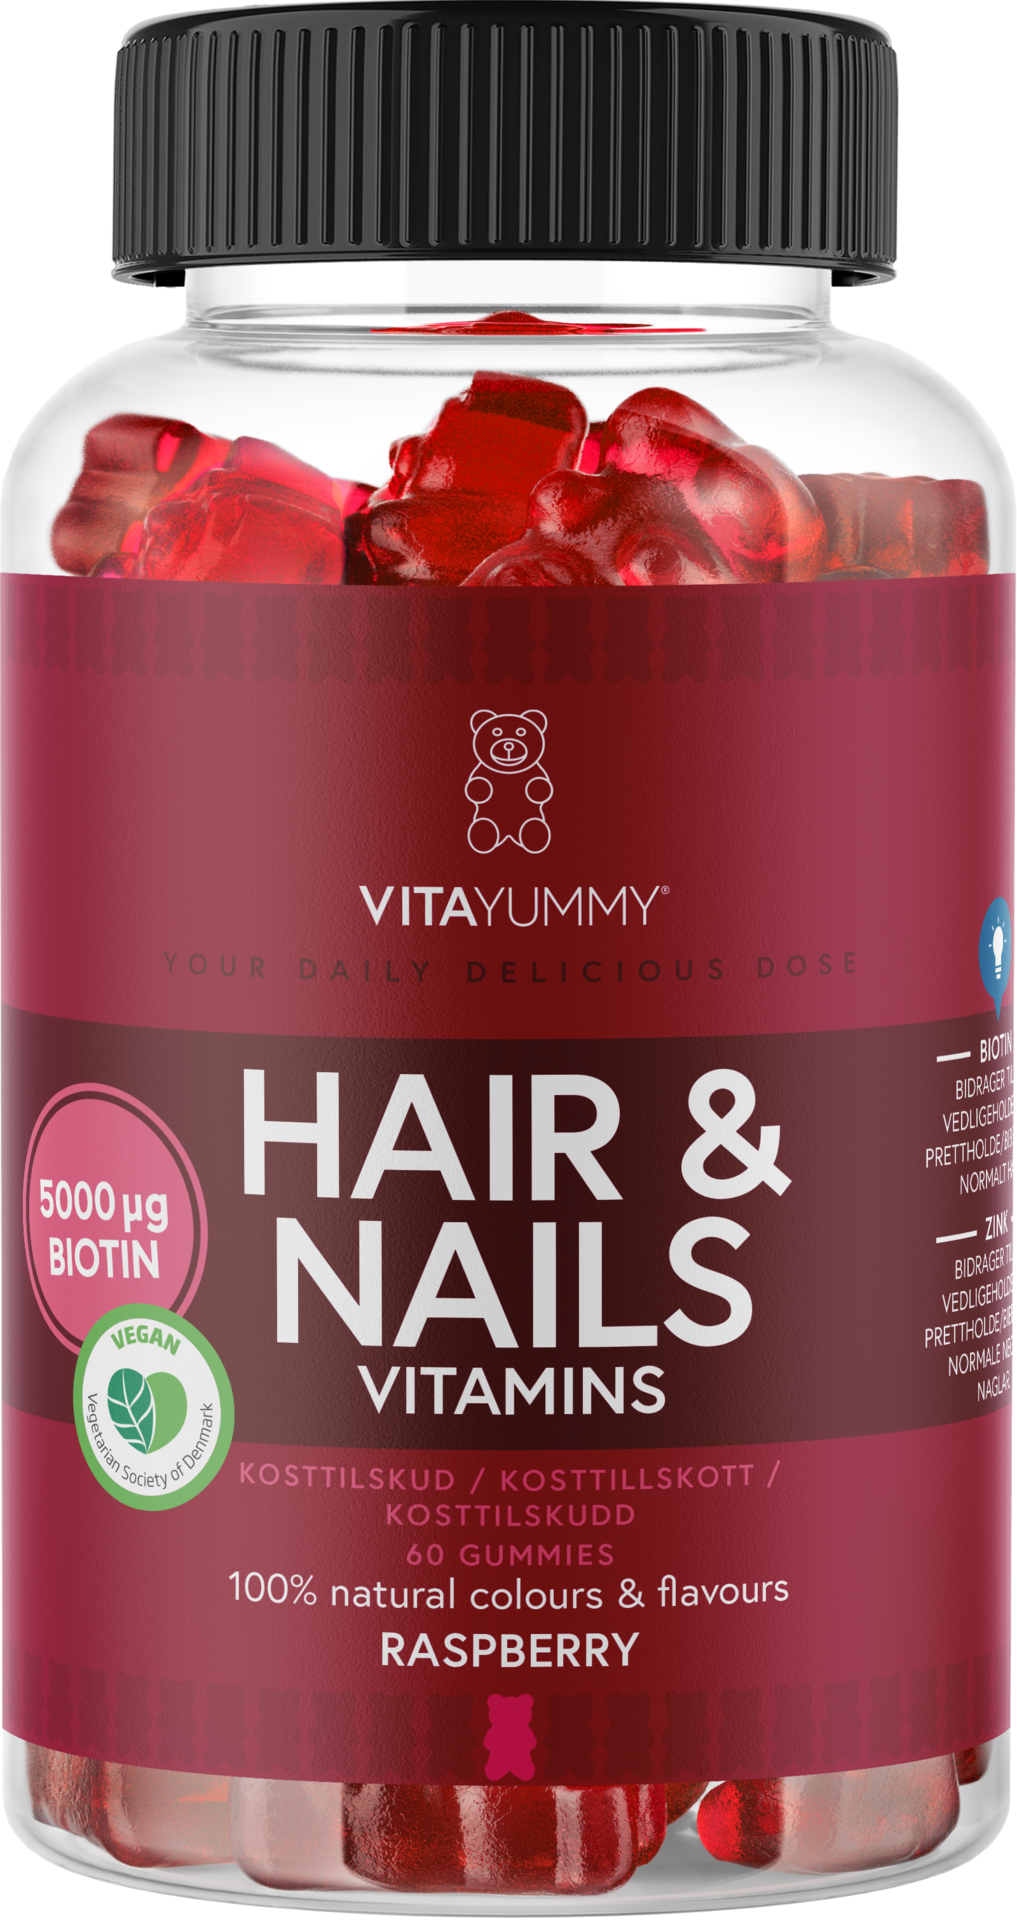 VitaYummy Hair & Nails Vitamins Raspberry 60 tuggtabletter